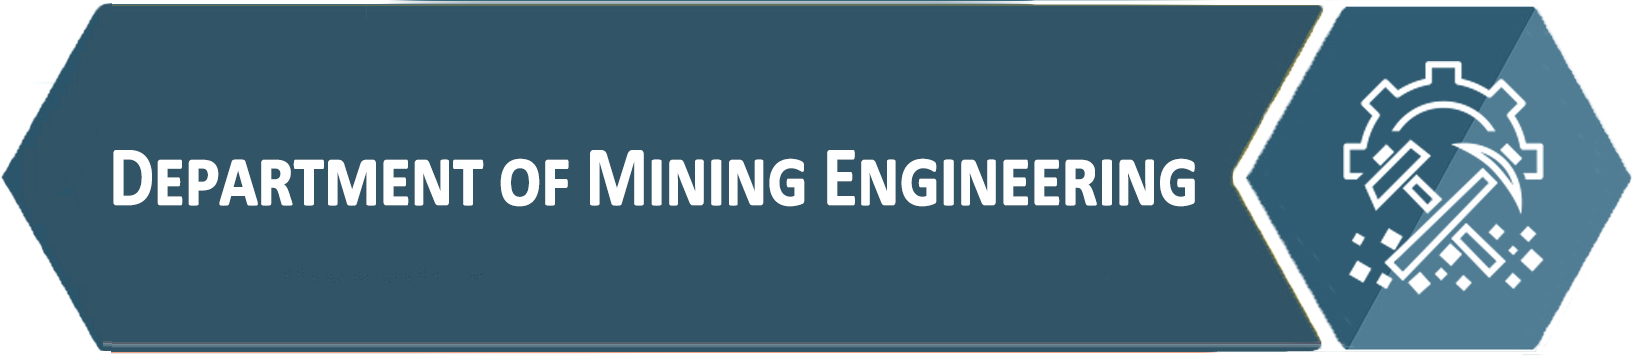 Department-of-Mining-Engineering